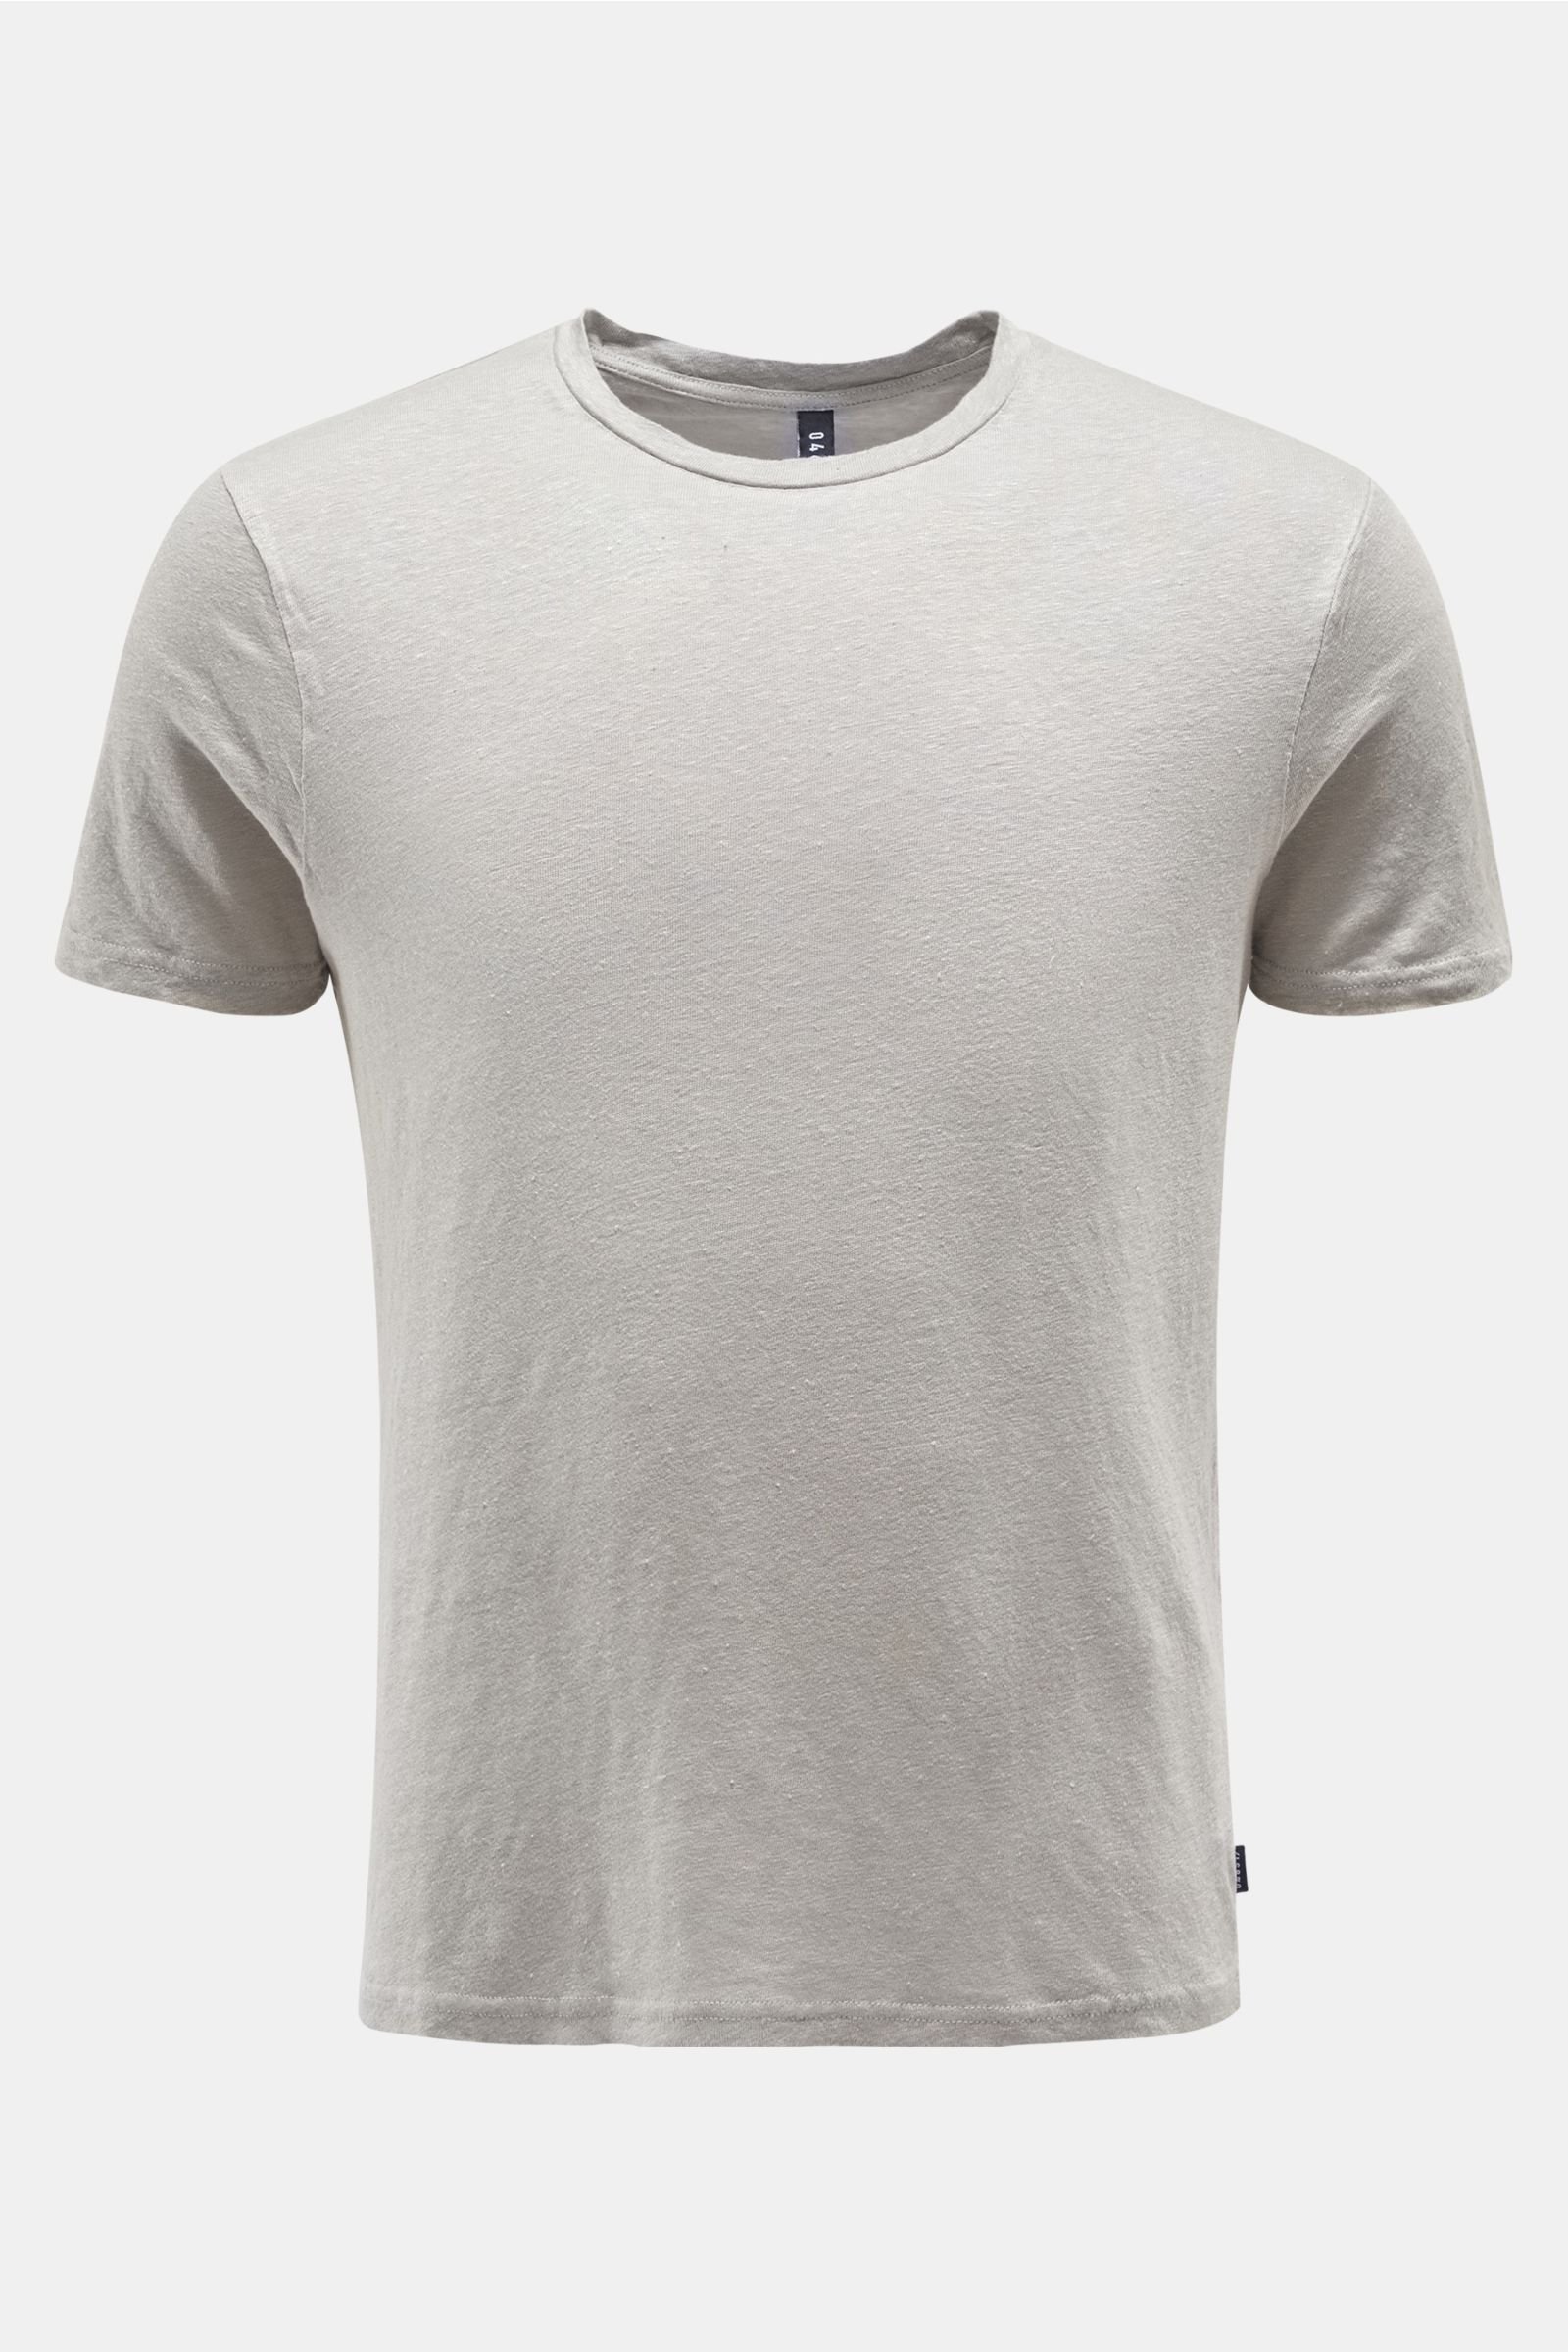 Linen crew neck T-shirt grey